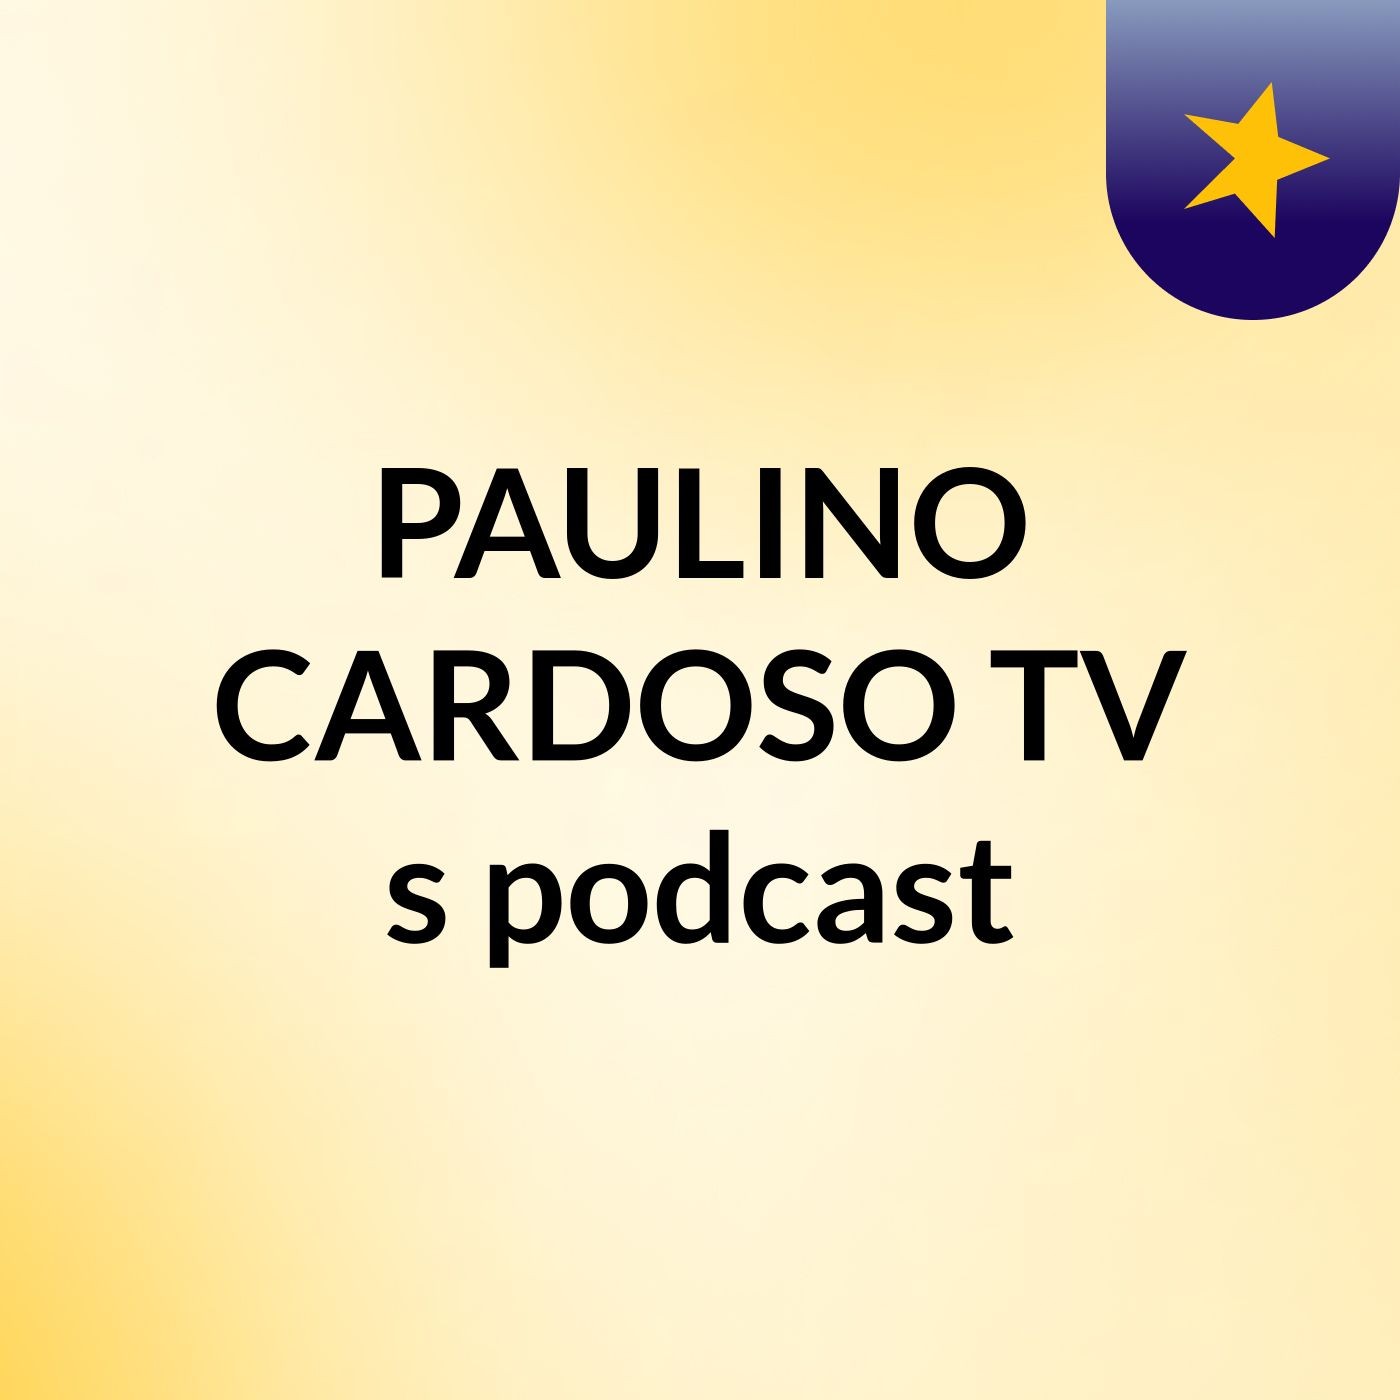 PAULINO CARDOSO TV's podcast